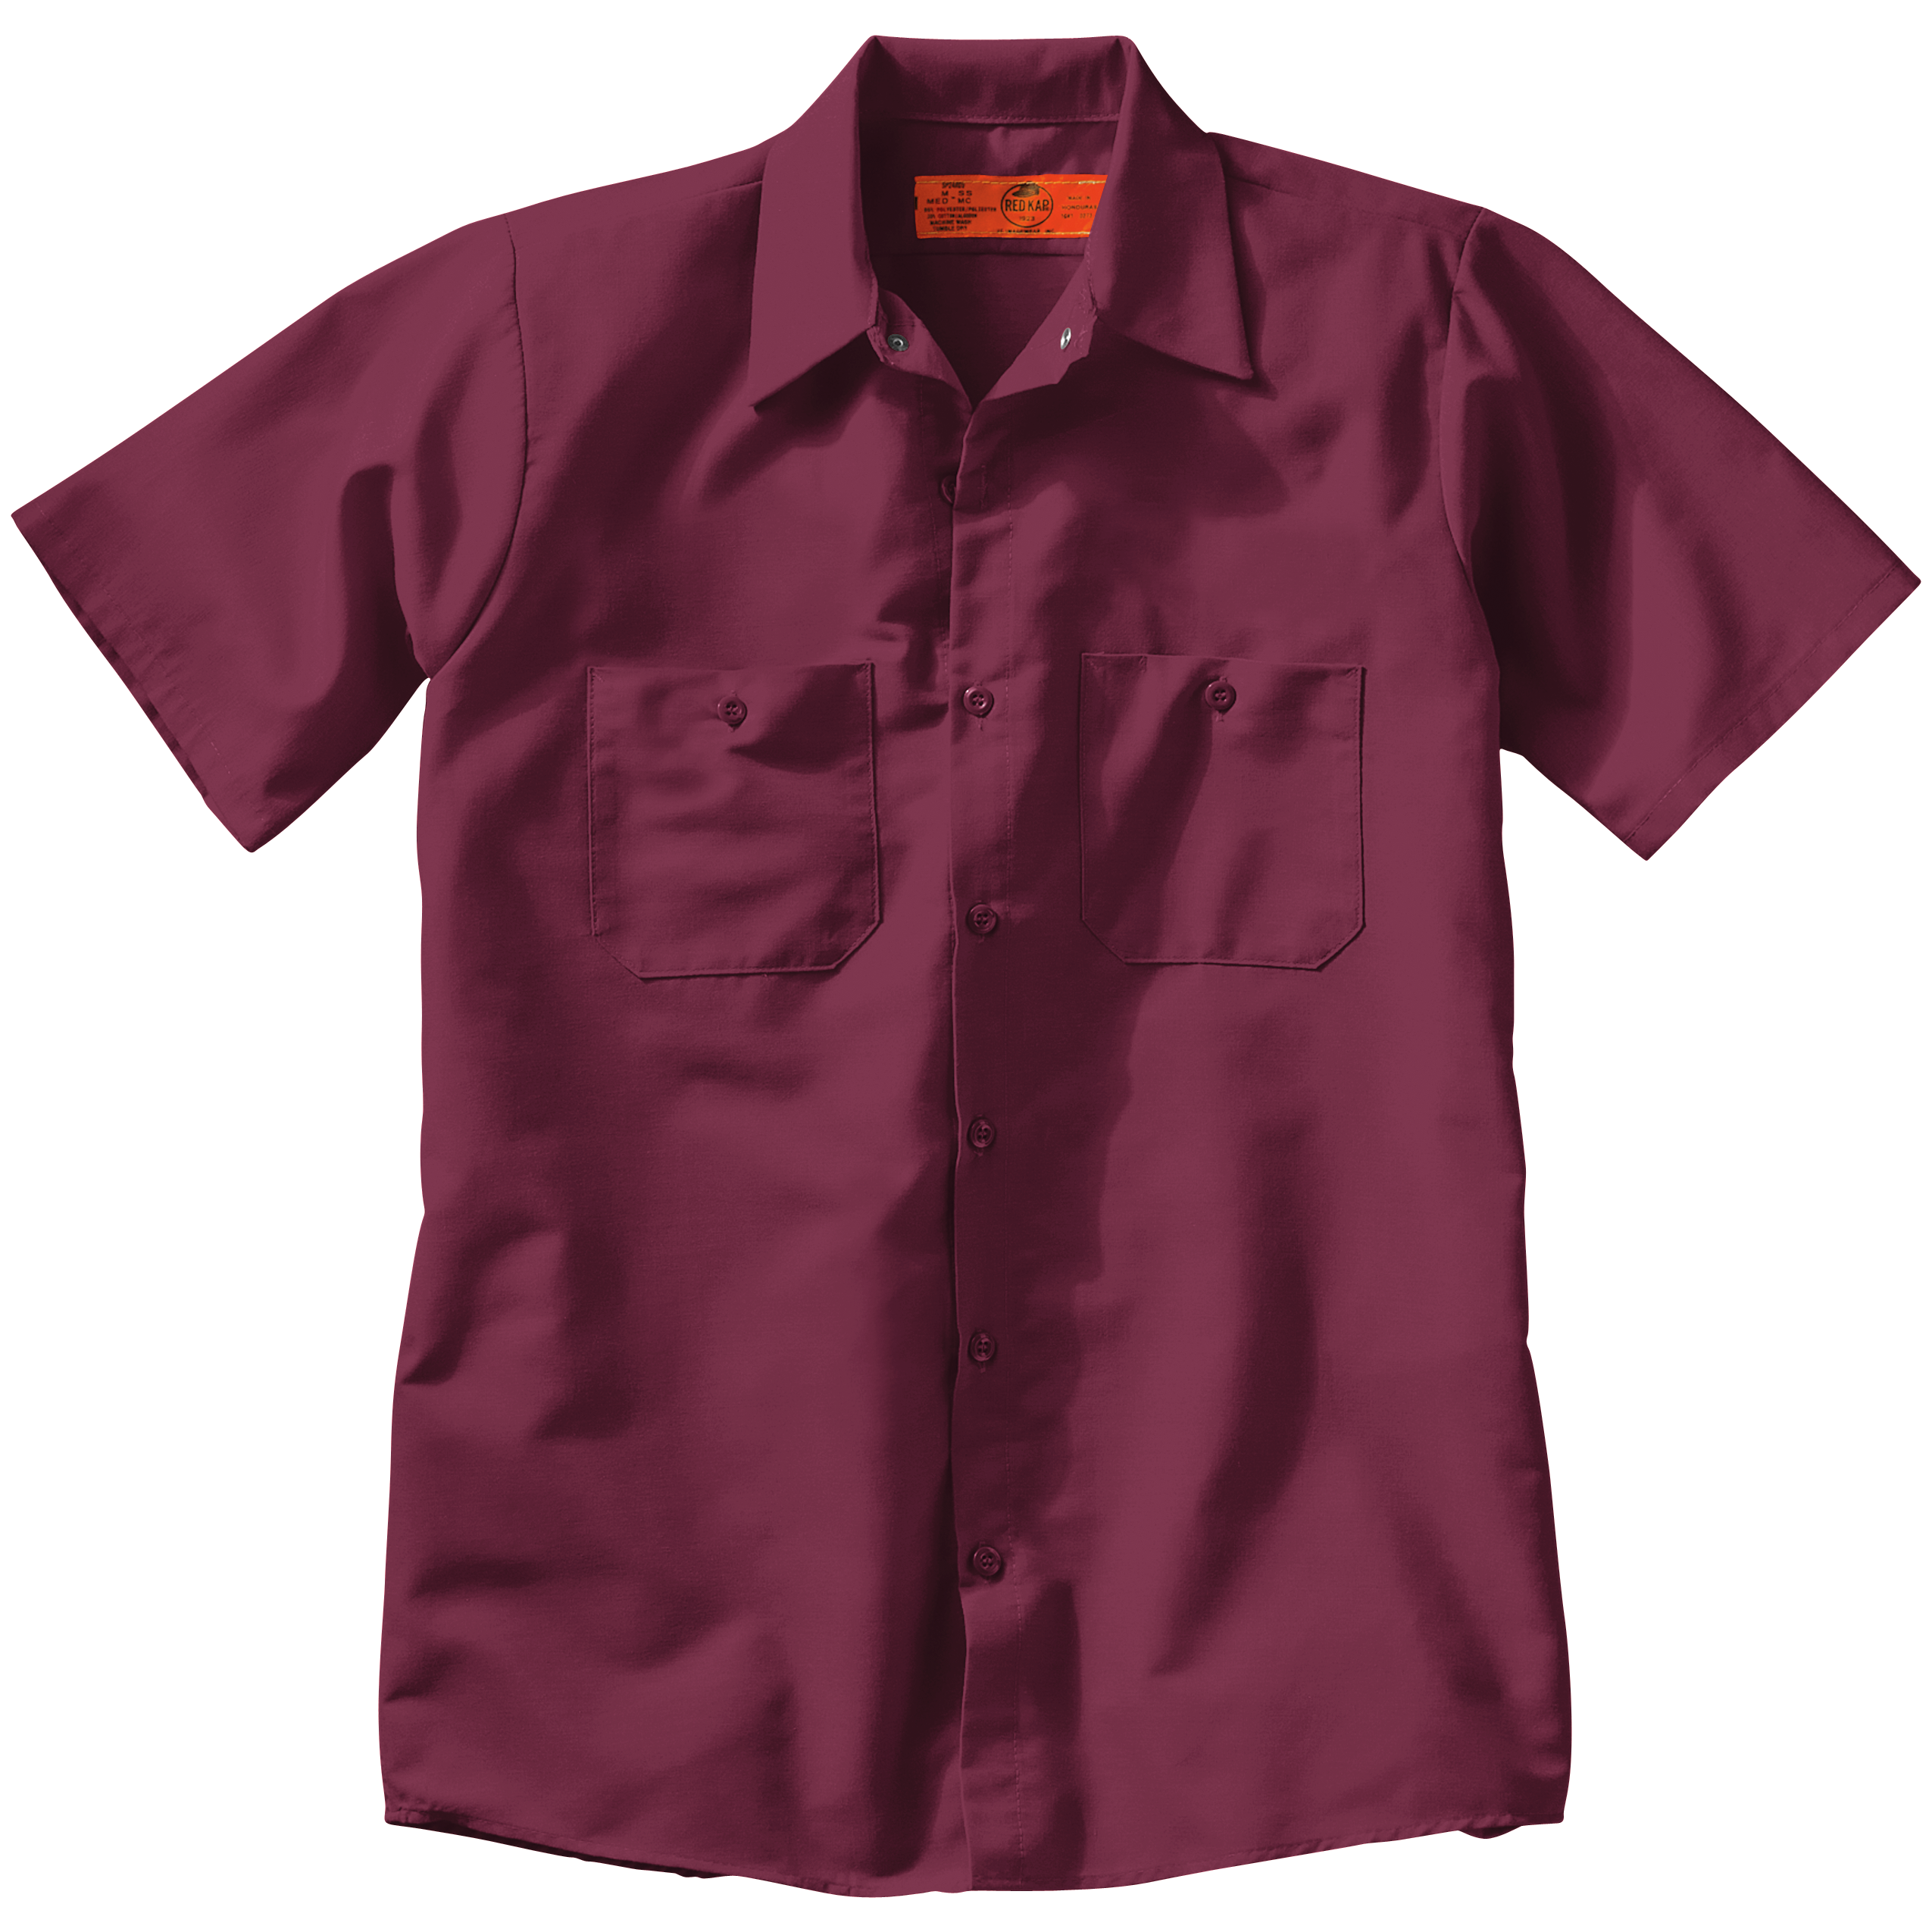 Red Kap® Industrial Work Shirt - AdventNorth Canada